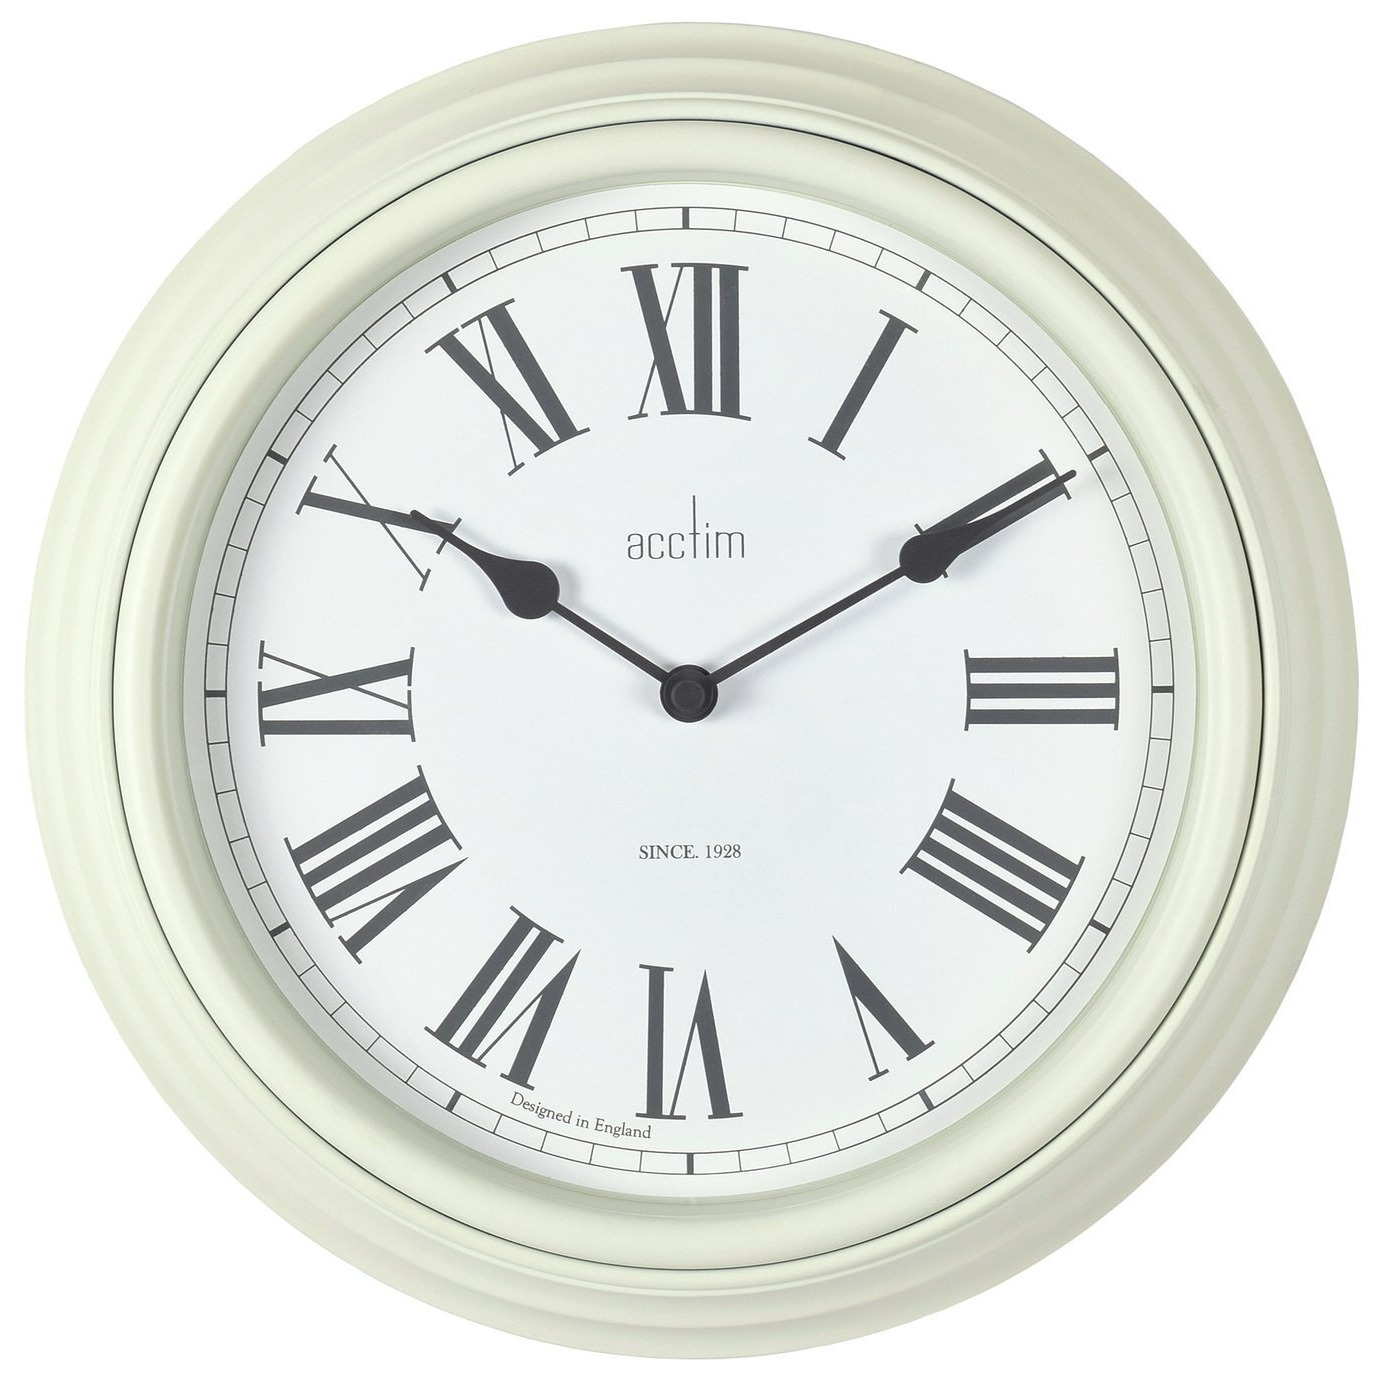 Acctim Vintage Wall Clock - Cream - image 1